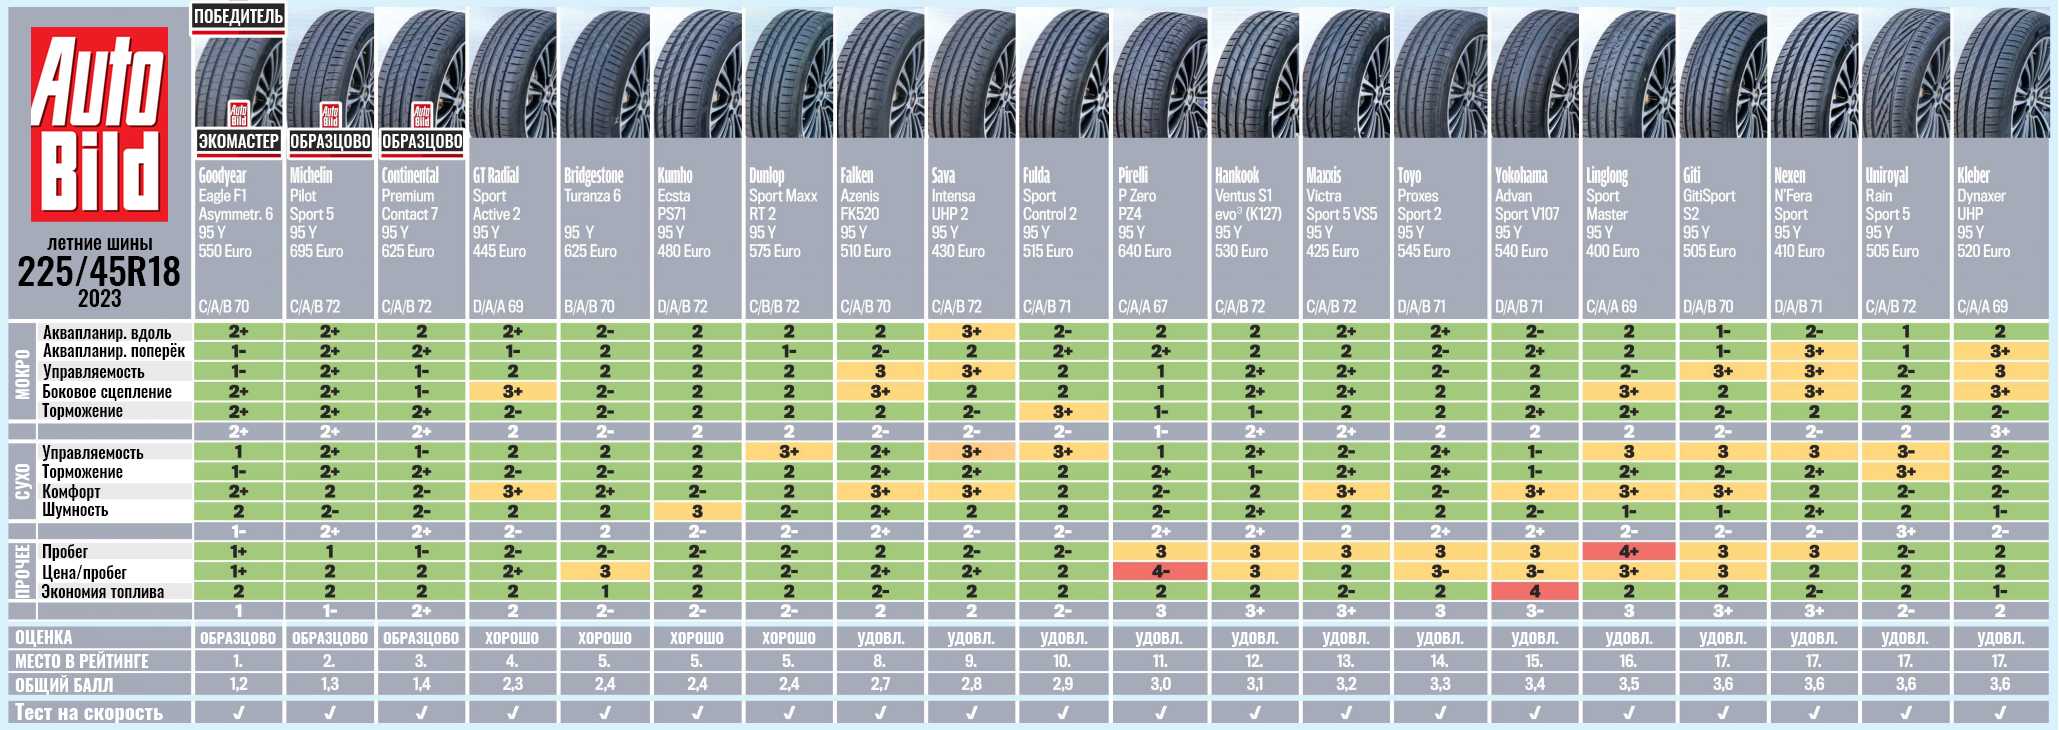 R16 лето тест. Autobild тест летних шин 2023. Тест летних шин за рулем. Тест летней резины. Тест летних шин за рулем 2023.